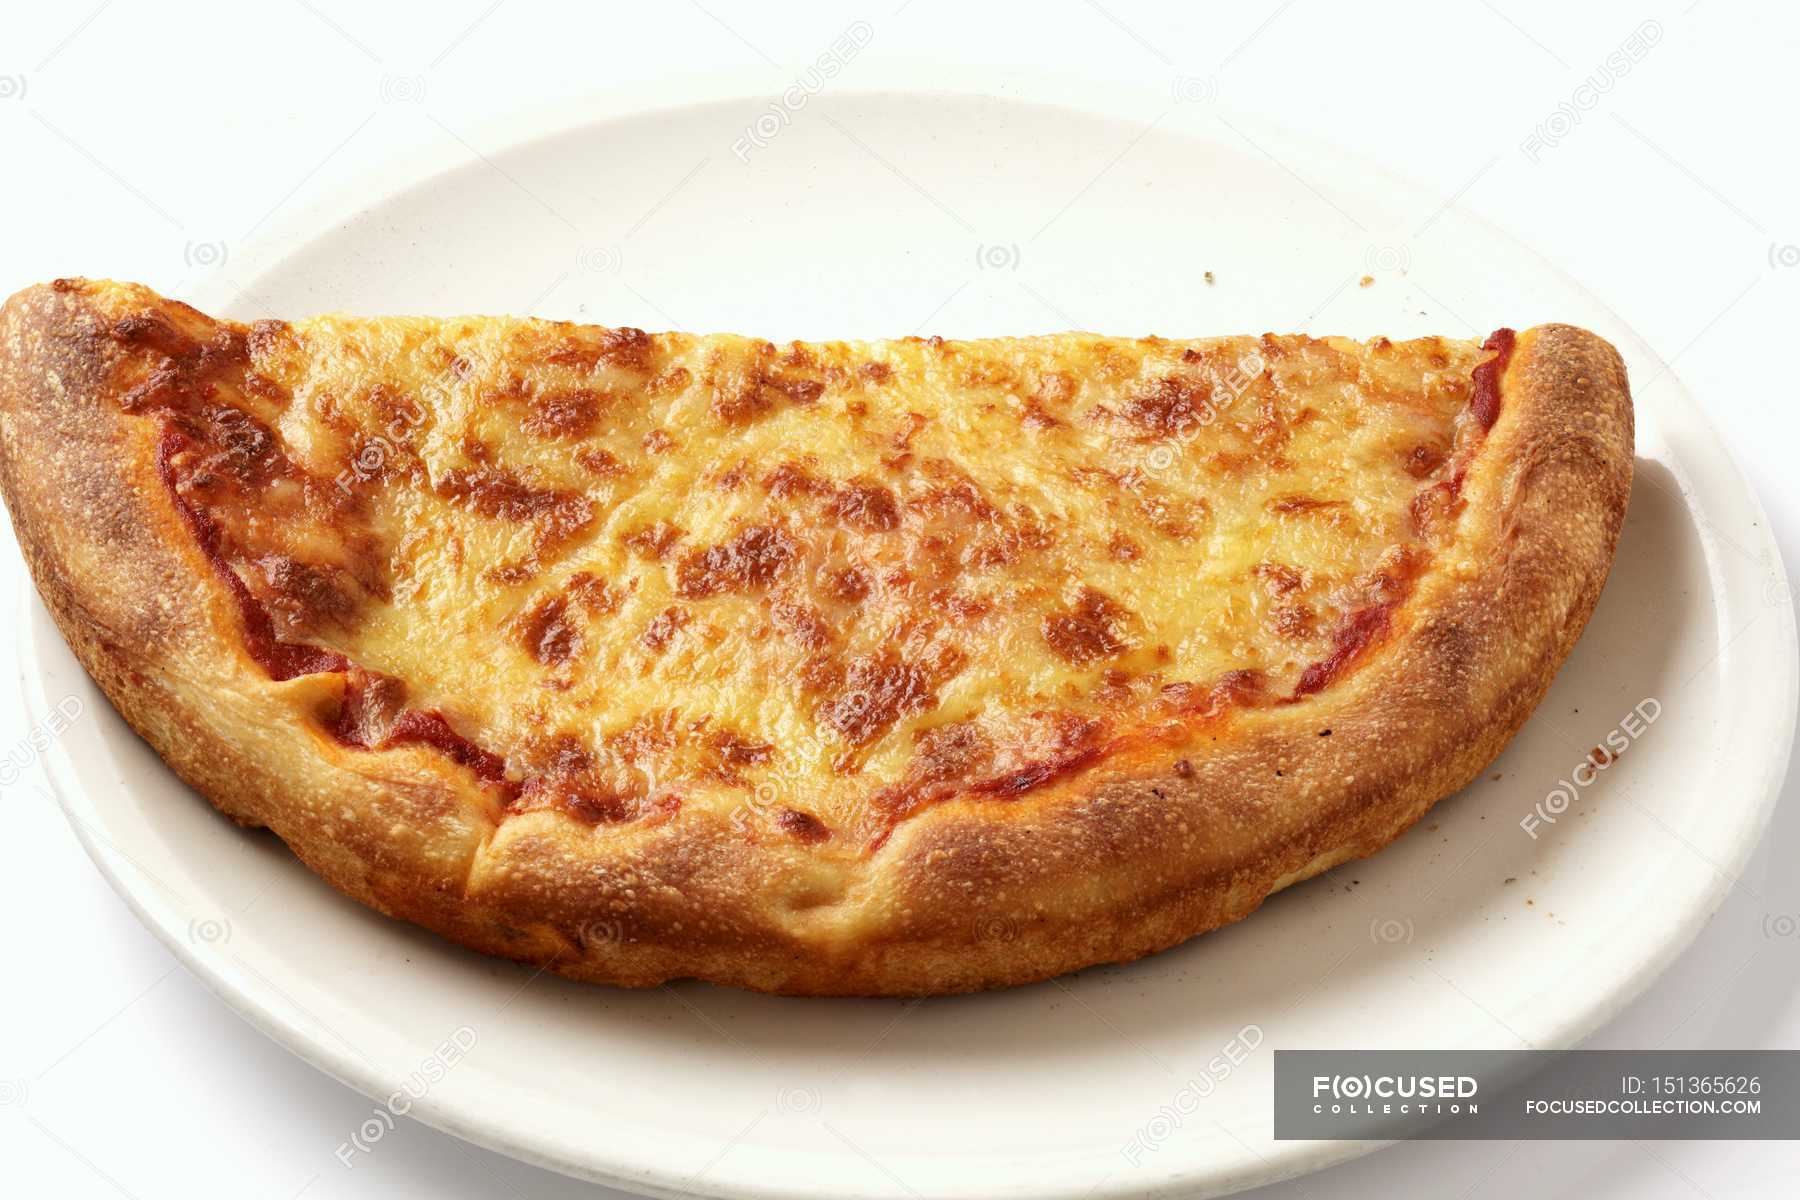 september Vervolg bevestig alstublieft Half of Margherita pizza — pepper, close up - Stock Photo | #151365626